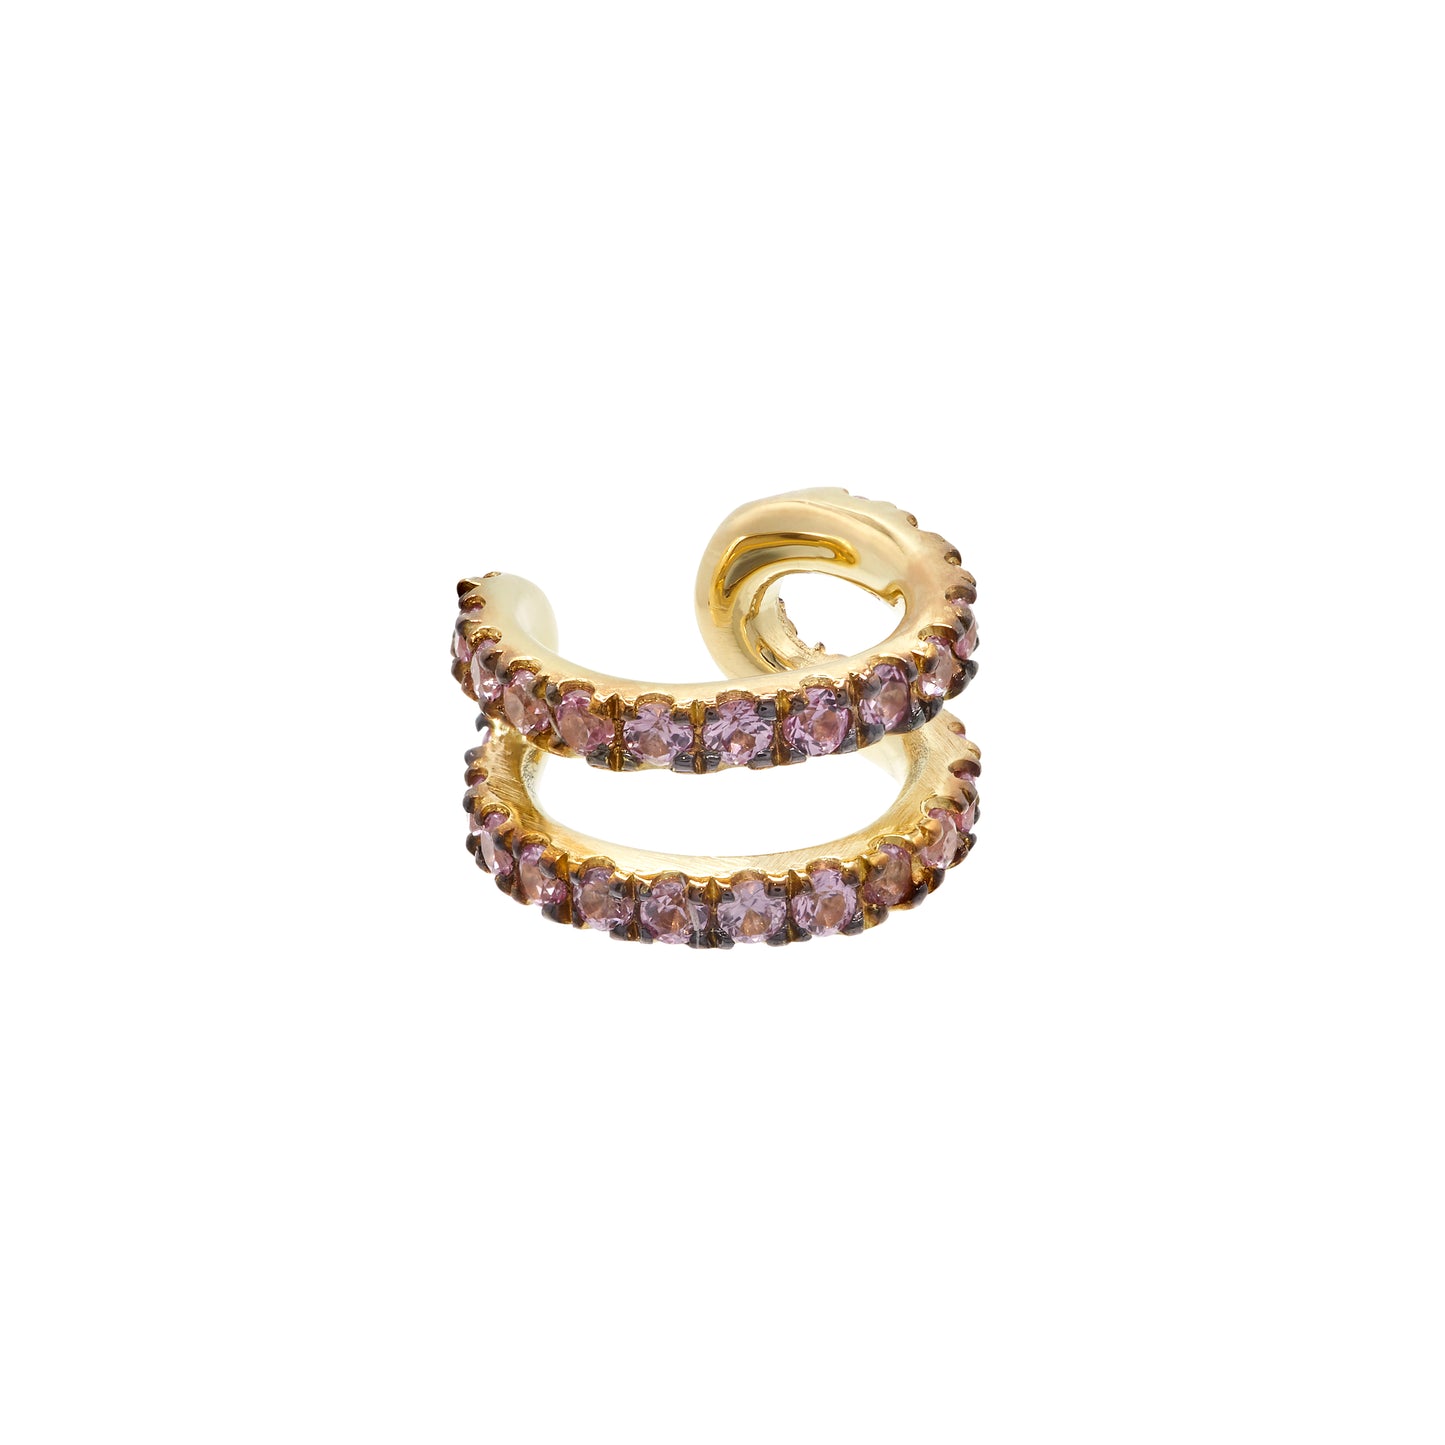 Ear cuff in 18k y. gold ,0.21carat pink sapphire